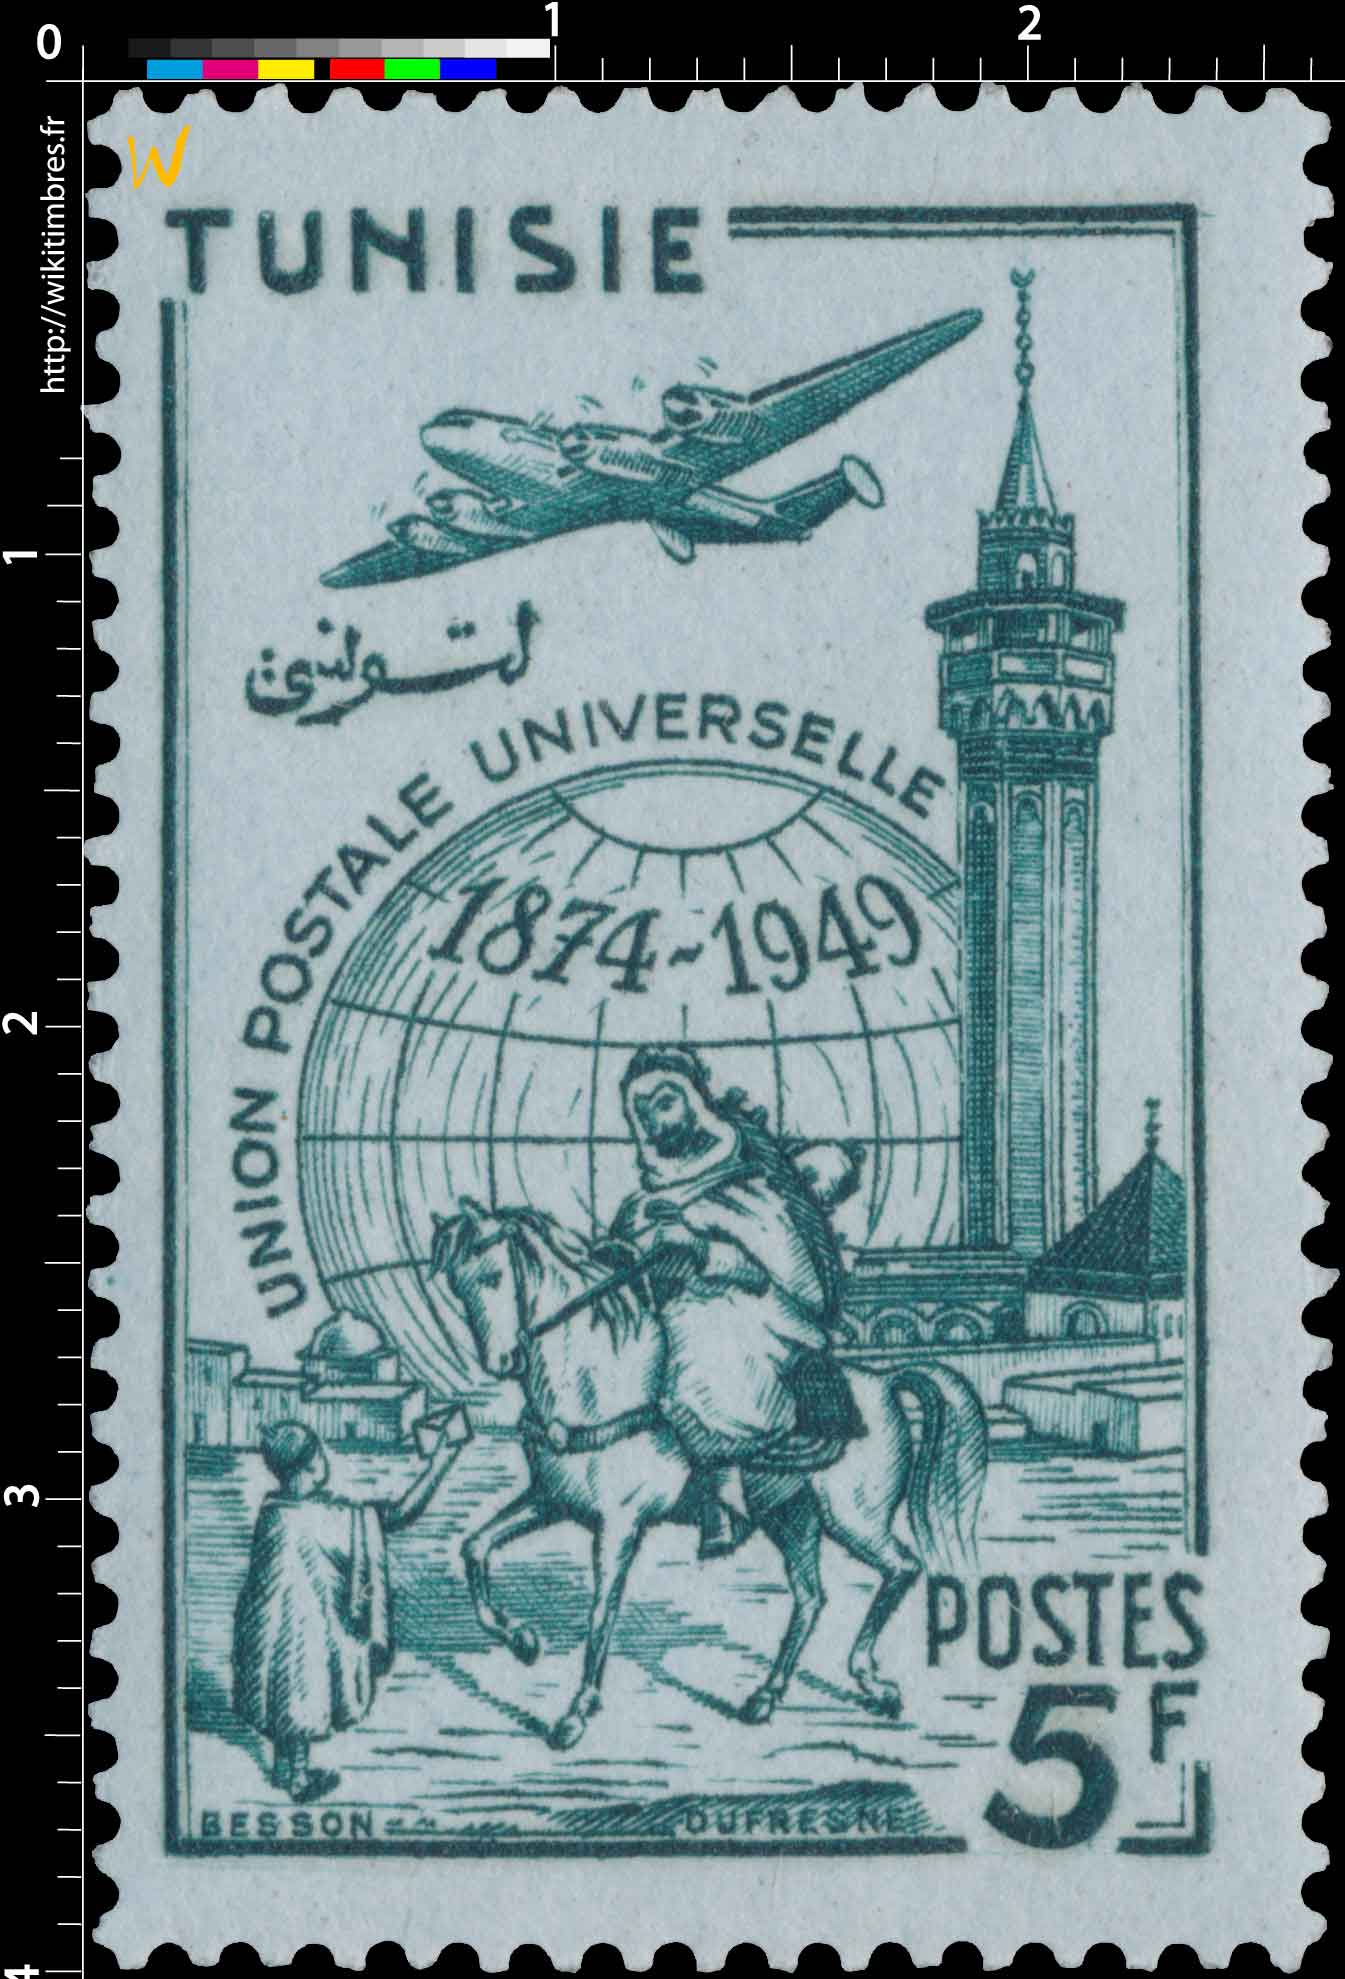 Tunisie - Union Postale Universelle 1874 - 1949